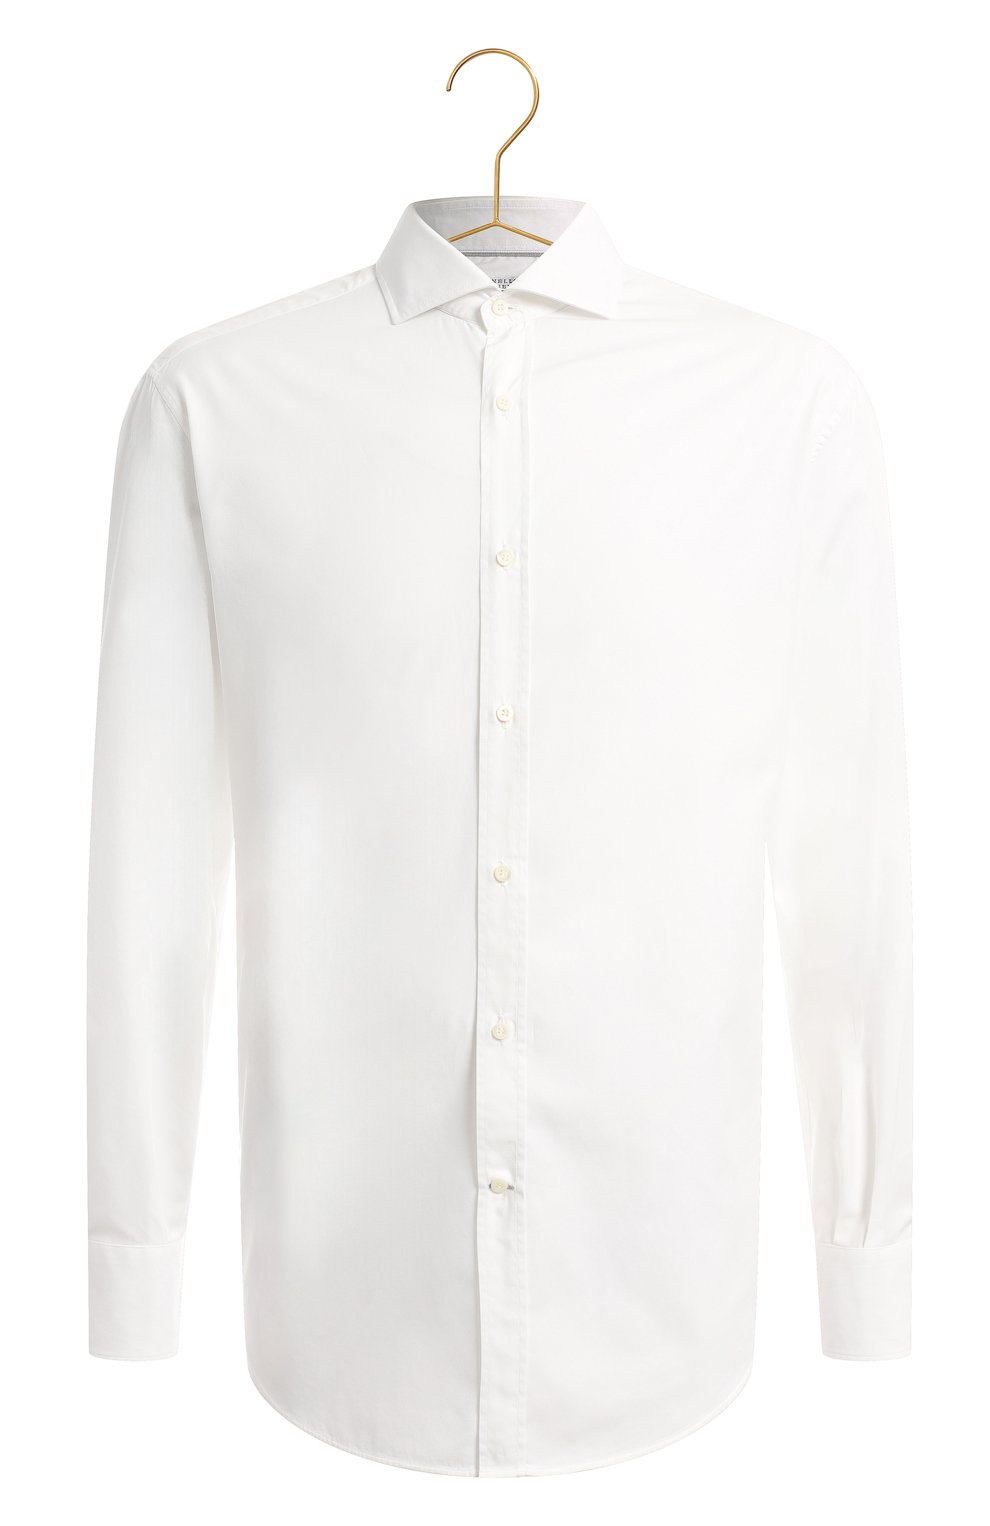 Хлопковая рубашка | Brunello Cucinelli | Белый - 1